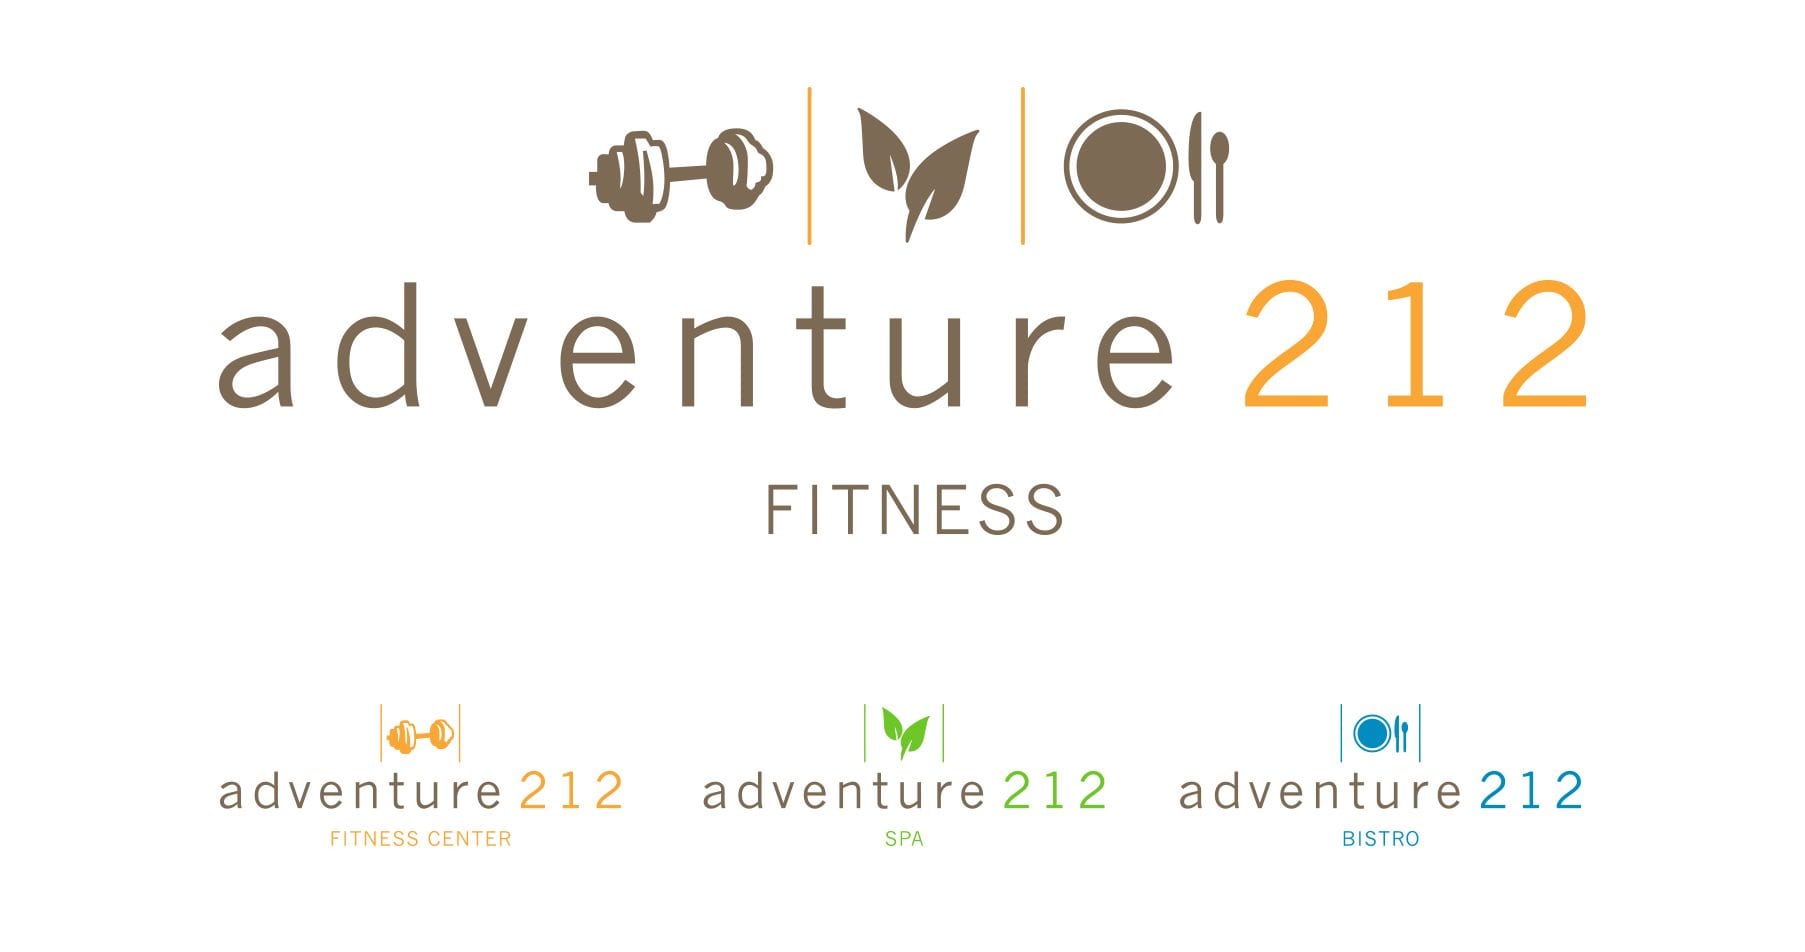 Adventure 212 Fitness